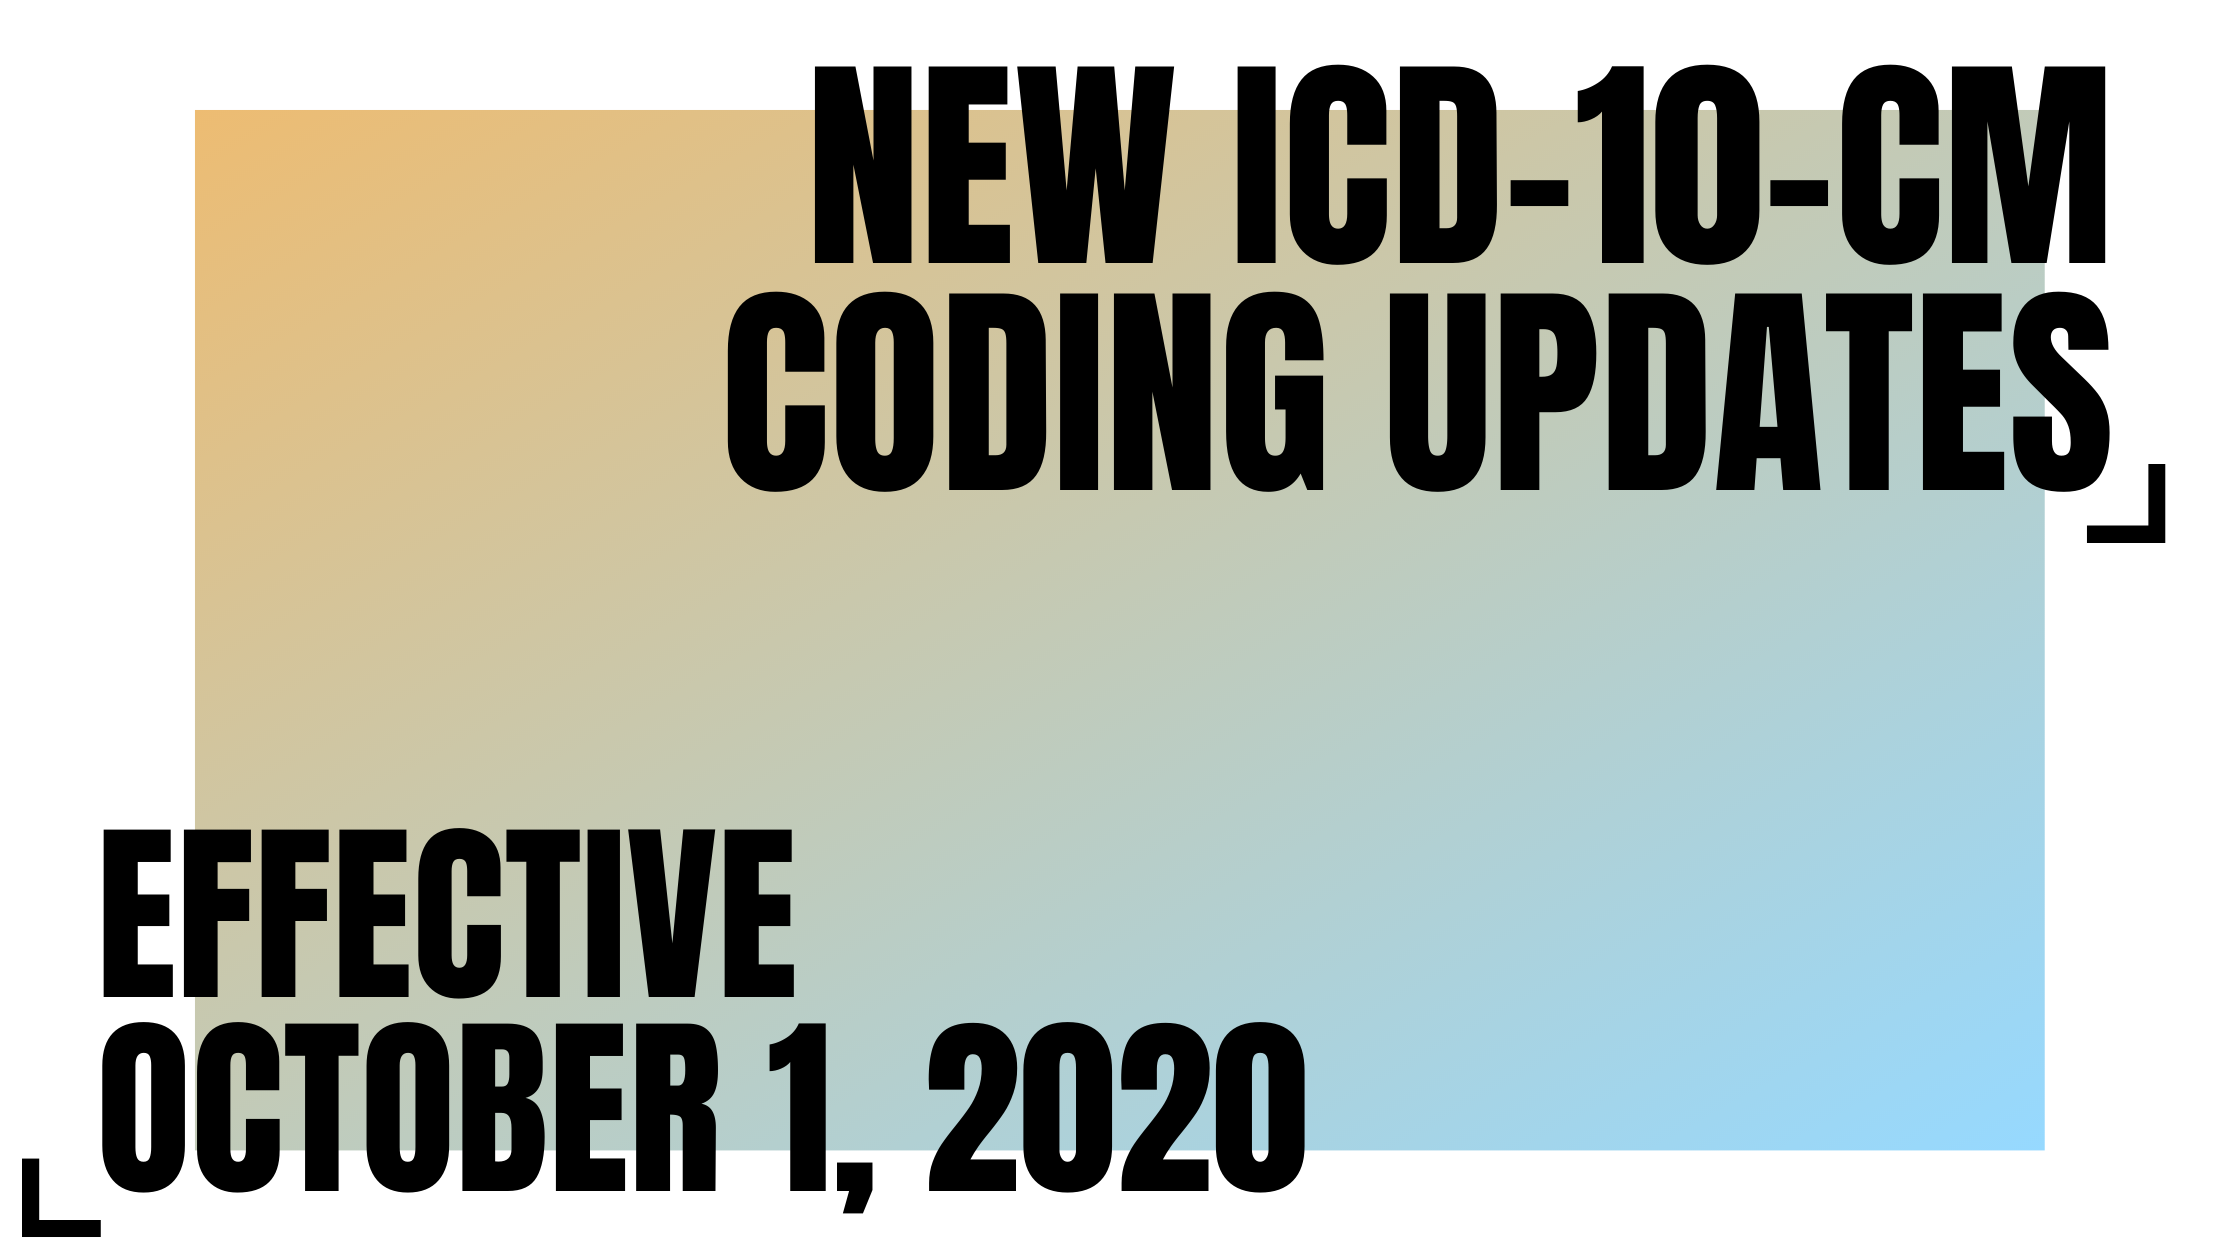 ICD-10-CM Coding Updates